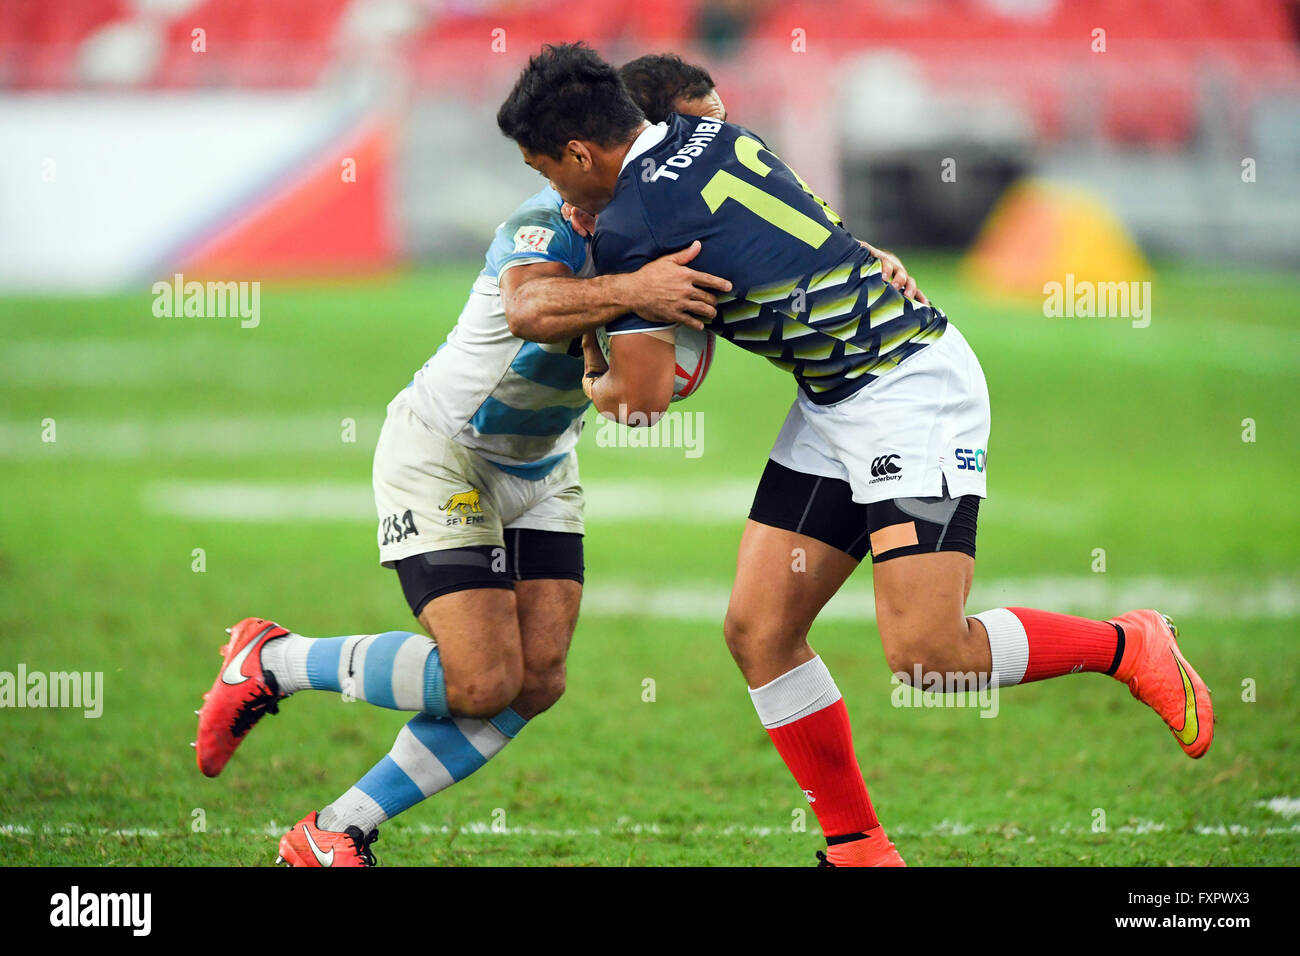 Kazuhiro Goya (JPN), APRL 16, 2016 - Rugby : HSBC Sevens World Series, Singapore Sevens match Japan and Argentina at National Stadium in Singapore. (Photo by Haruhiko Otsuka/AFLO) Stock Photo